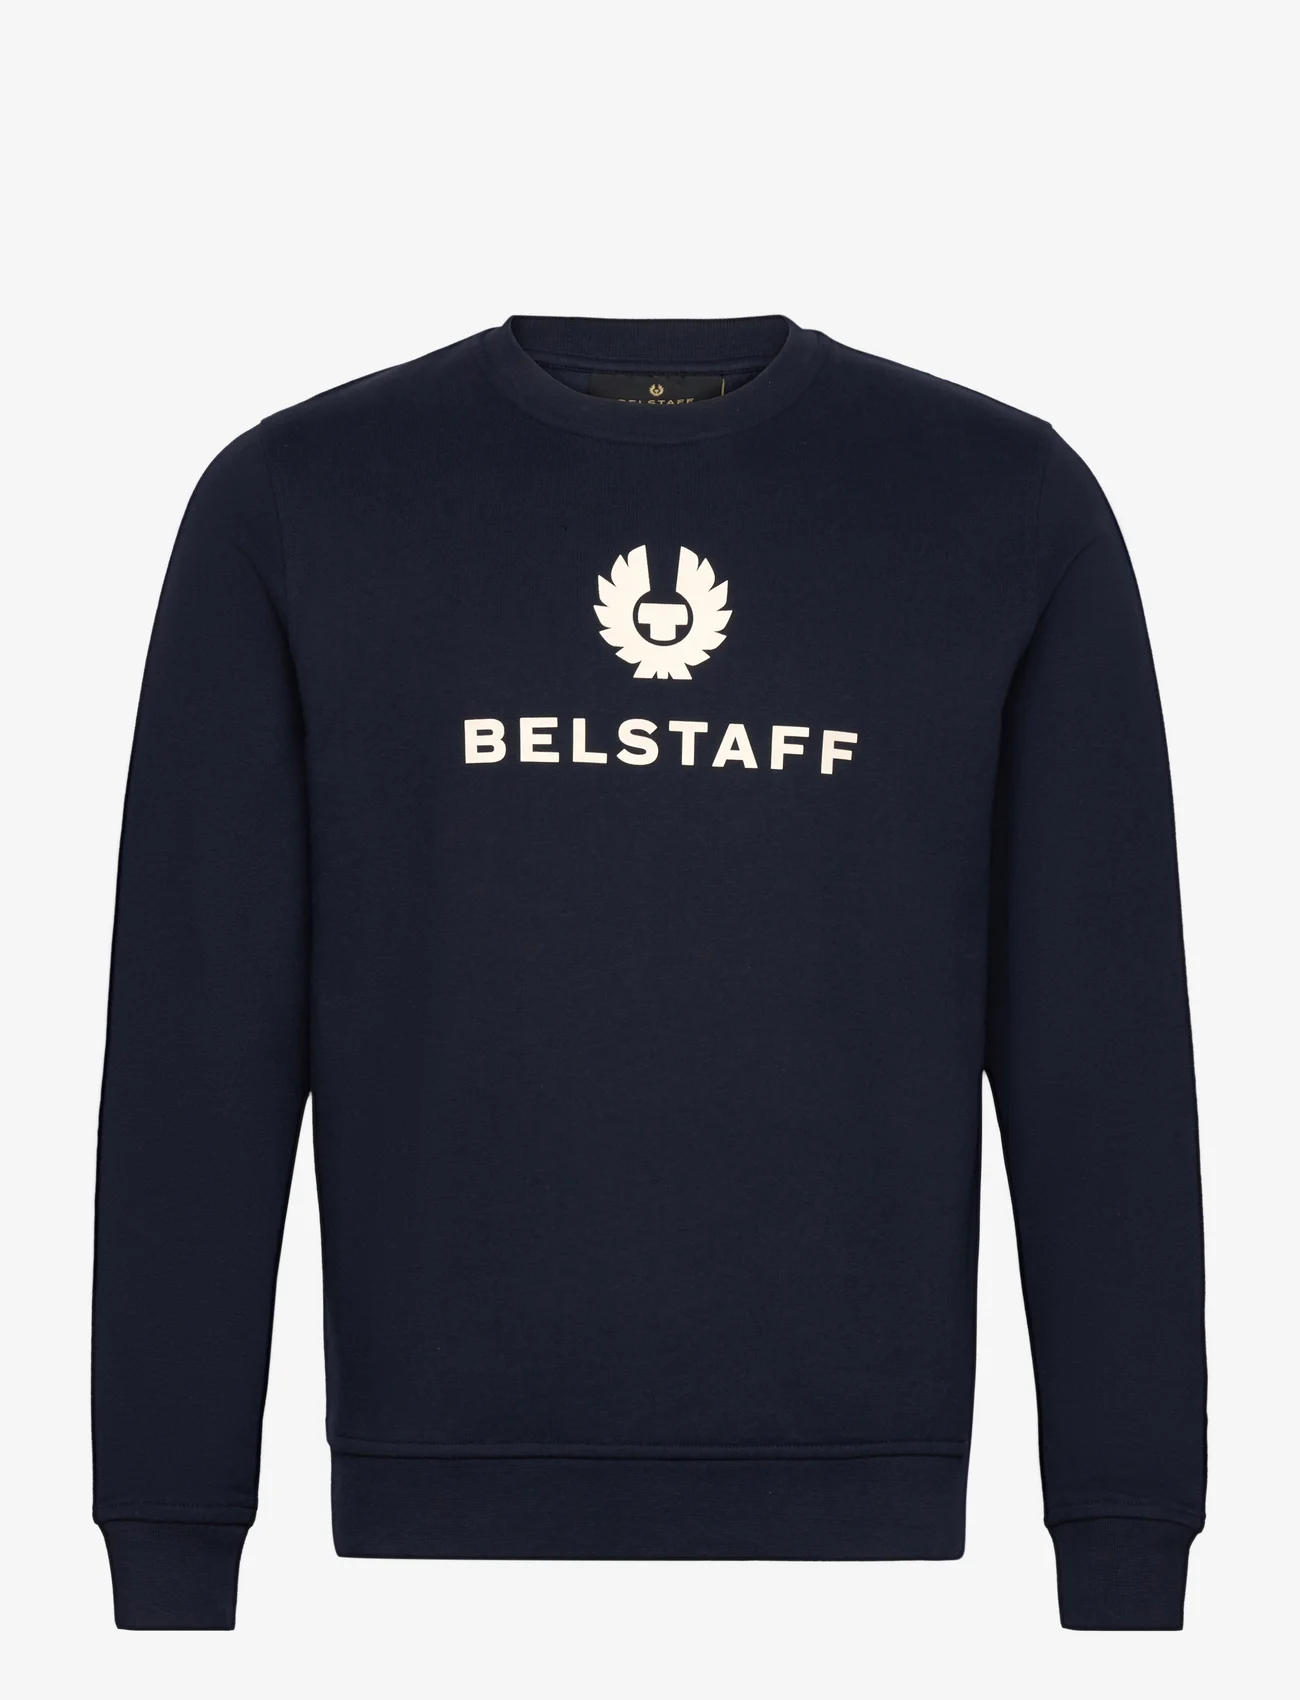 Belstaff - BELSTAFF SIGNATURE CREWNECK SWEATSHIRT - rõivad - dark ink - 0